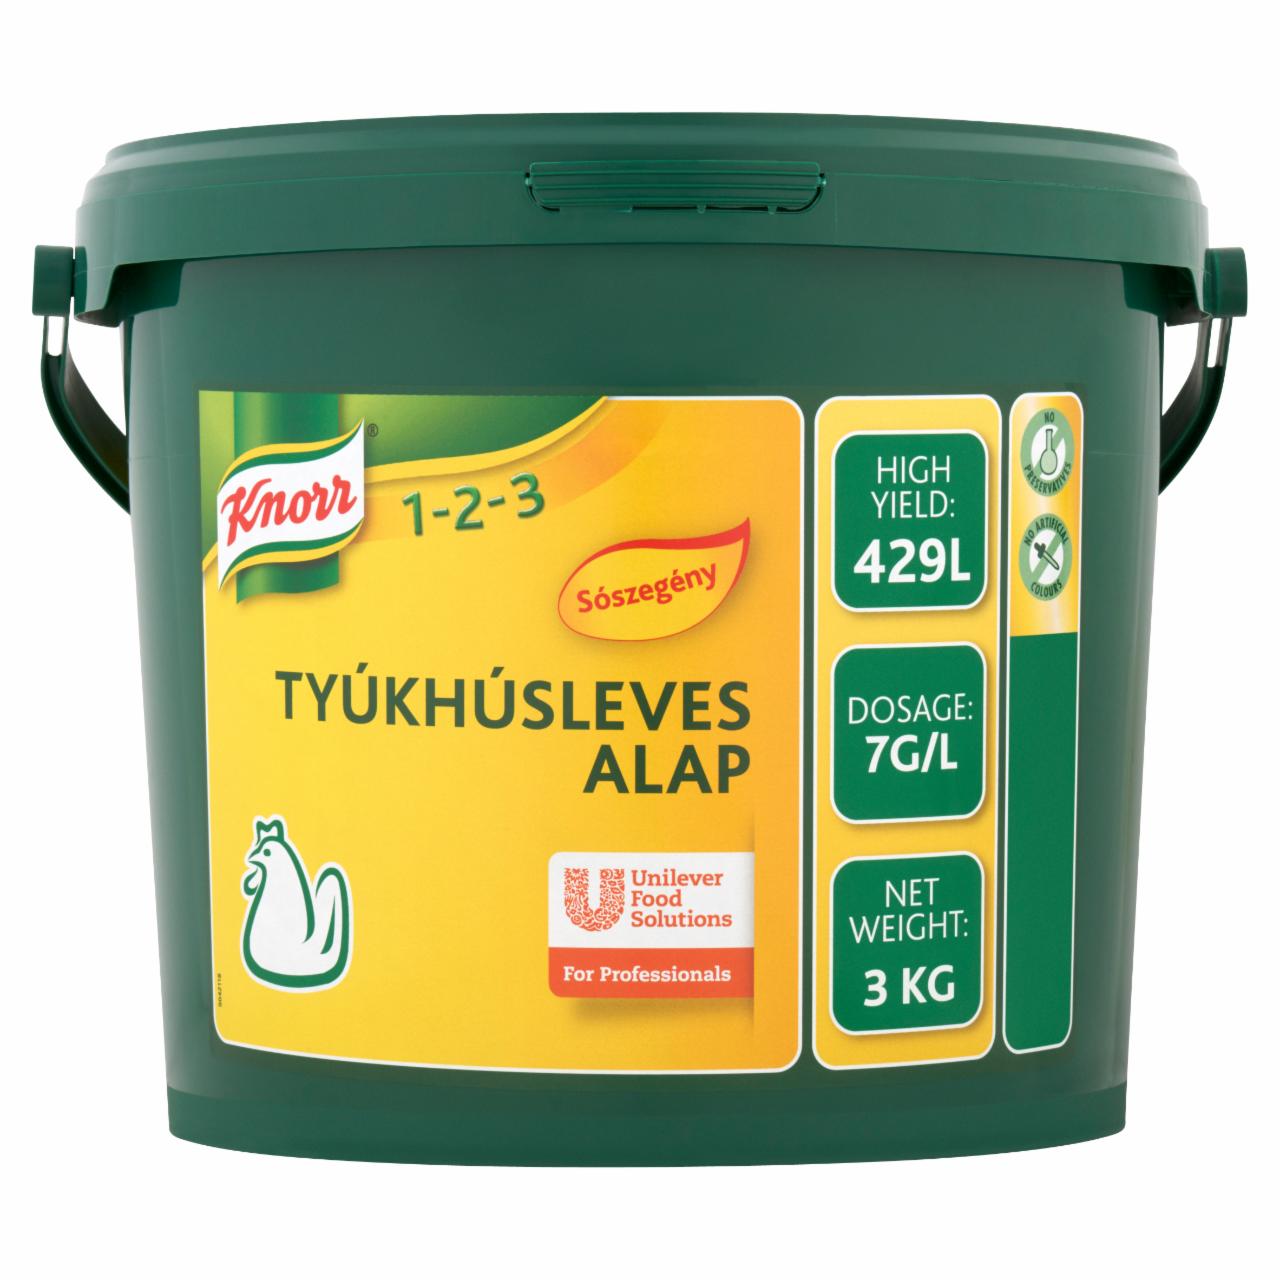 Képek - Knorr Tyúkhúsleves alap - sószegény 3 kg